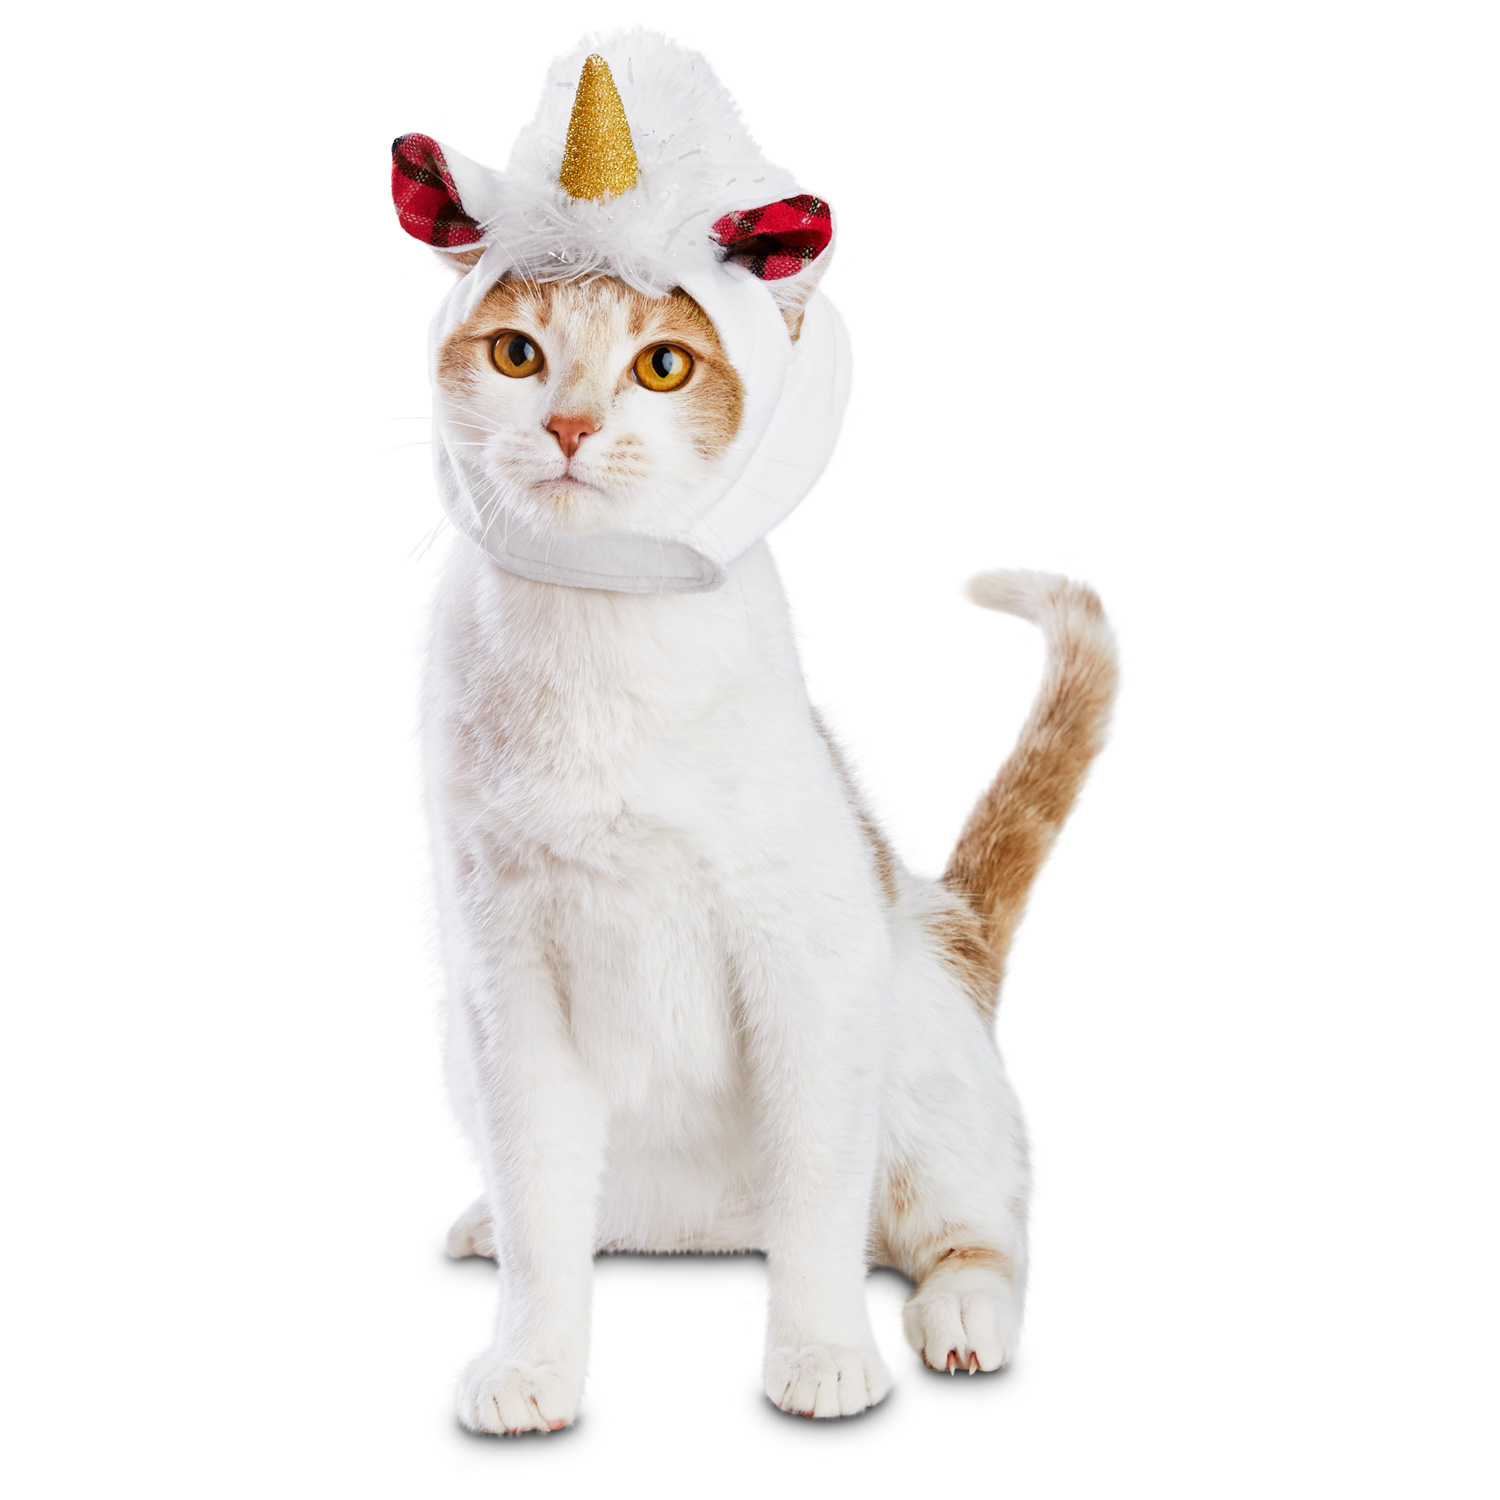 Cute Gifts for Cat Lovers - Super Cute Kawaii!!